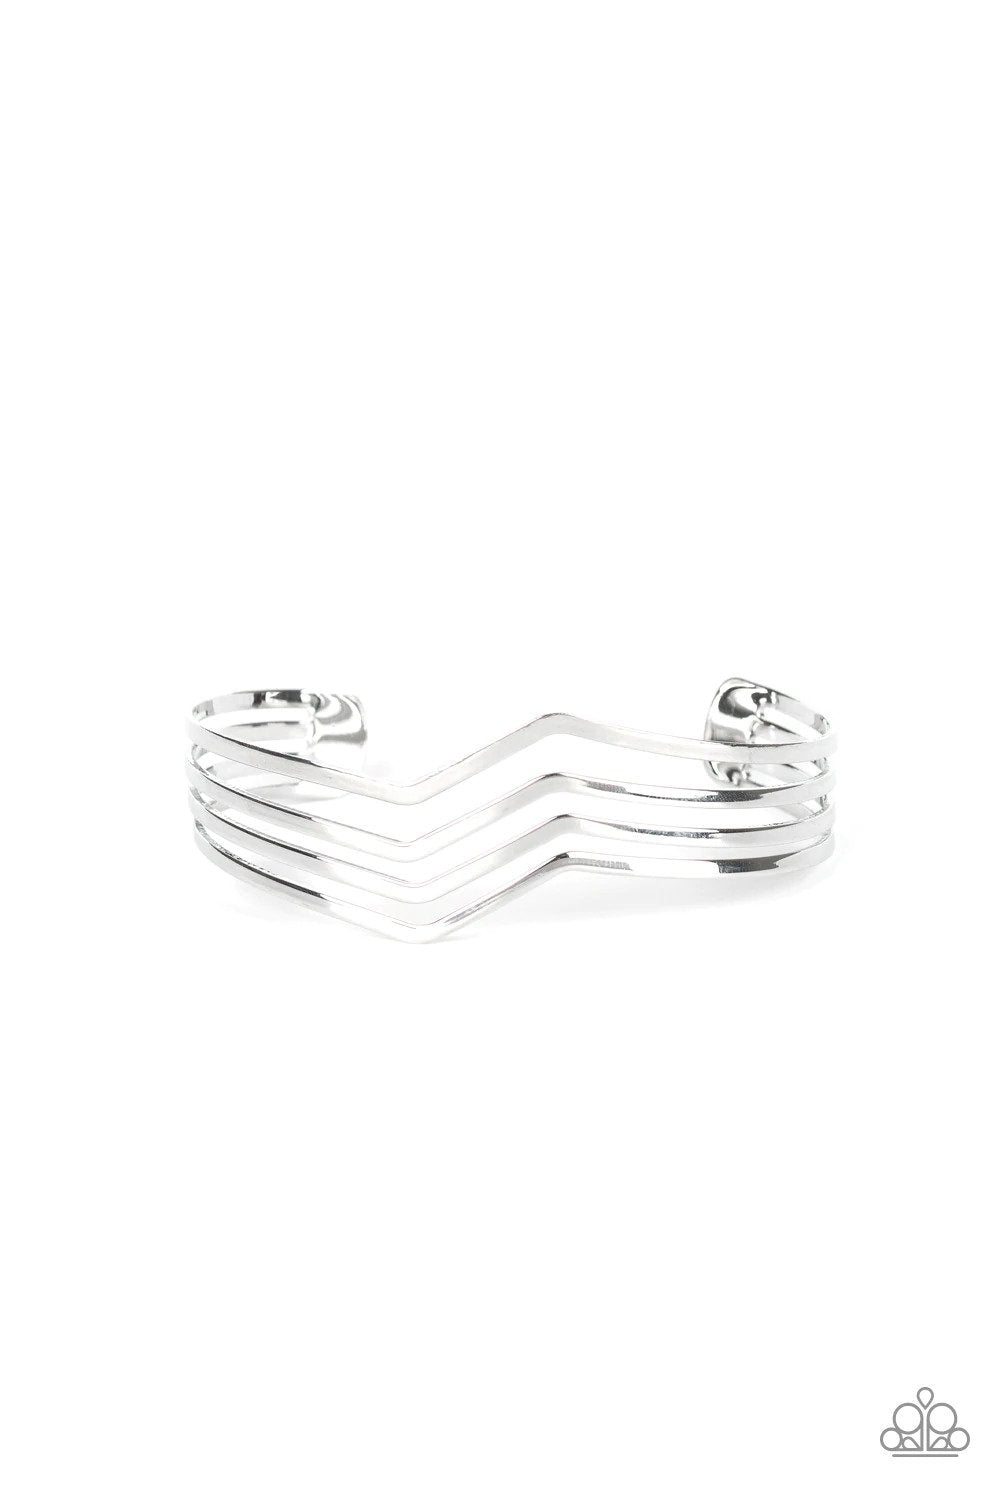 Waverunner Silver Cuff Bracelet - Paparazzi Accessories- lightbox - CarasShop.com - $5 Jewelry by Cara Jewels